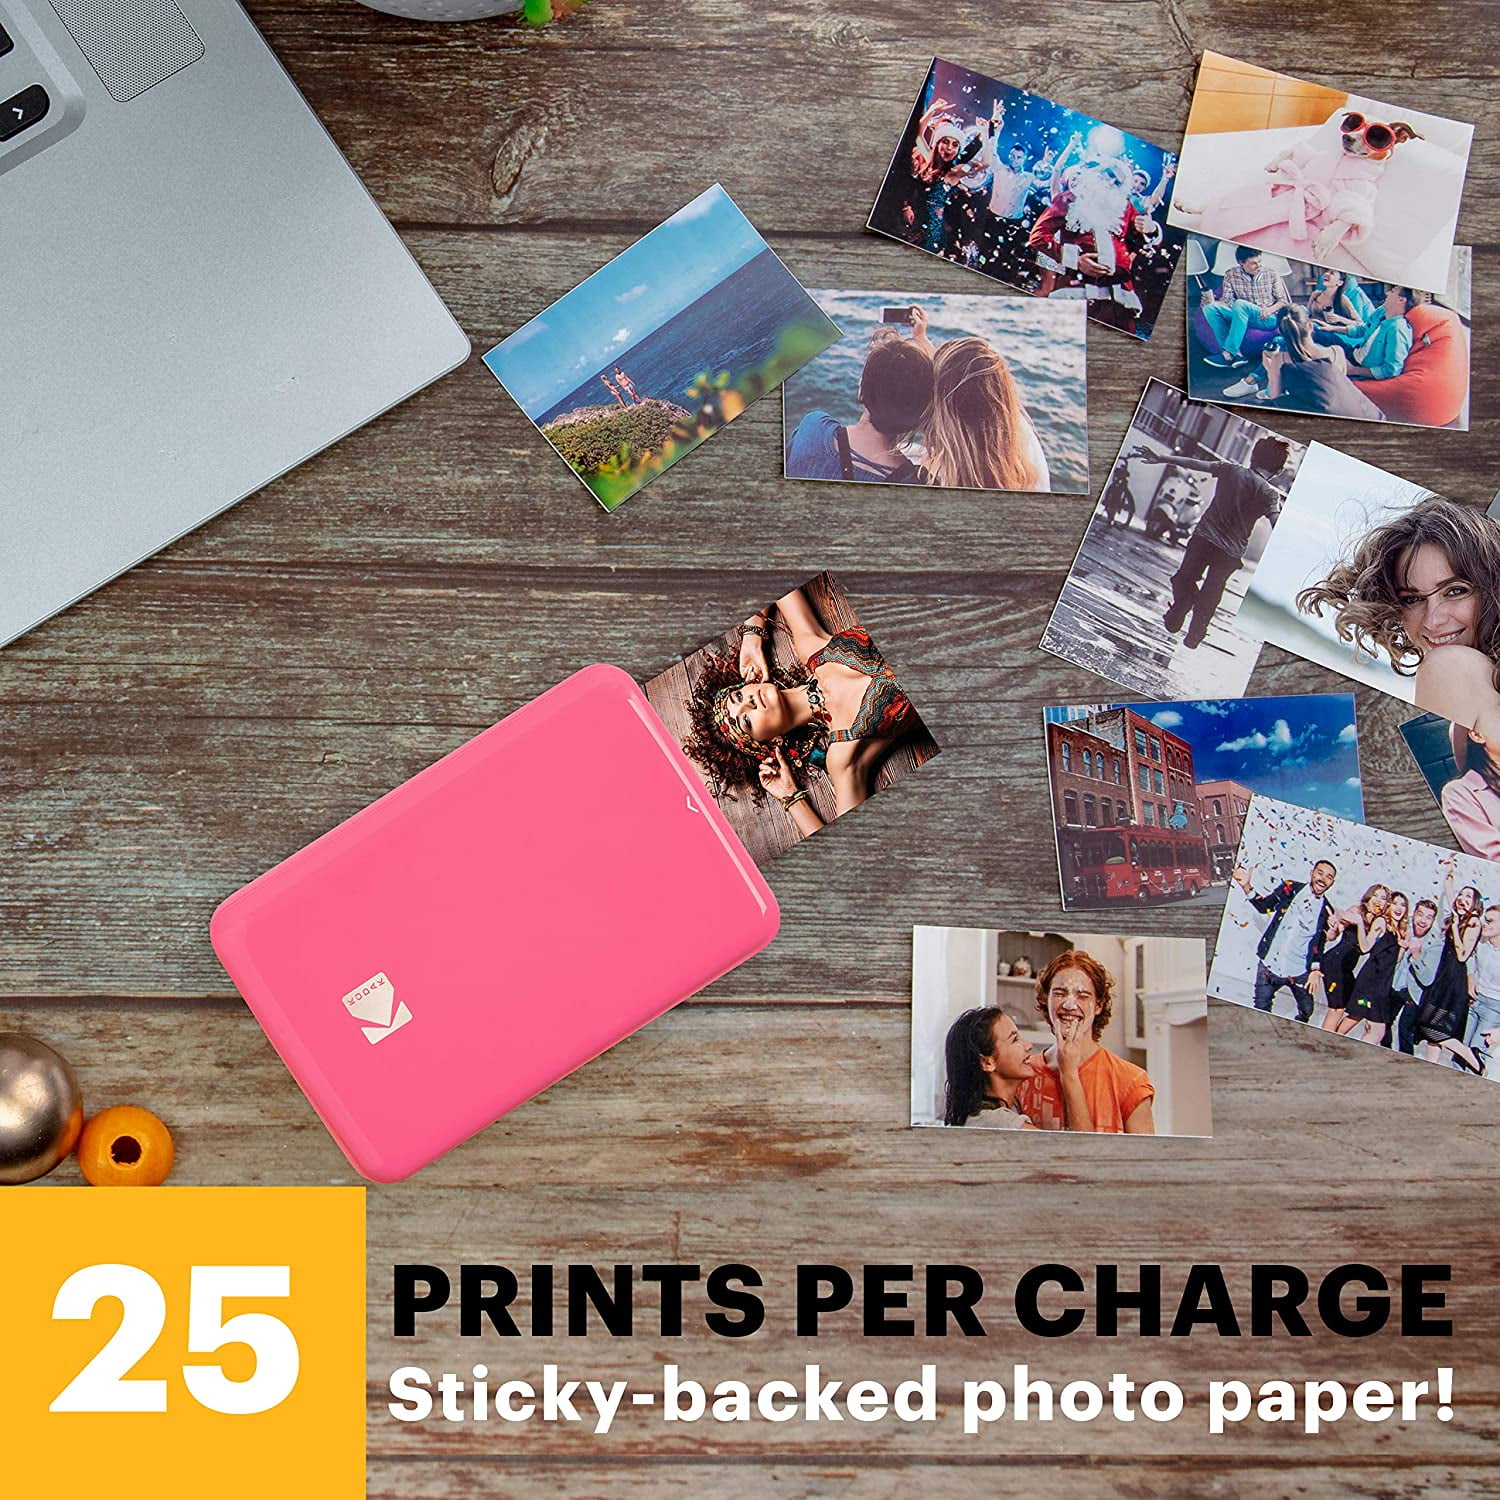 Zink Kodak Step Printer – Impresora inalámbrica de fotos de teléfono celular